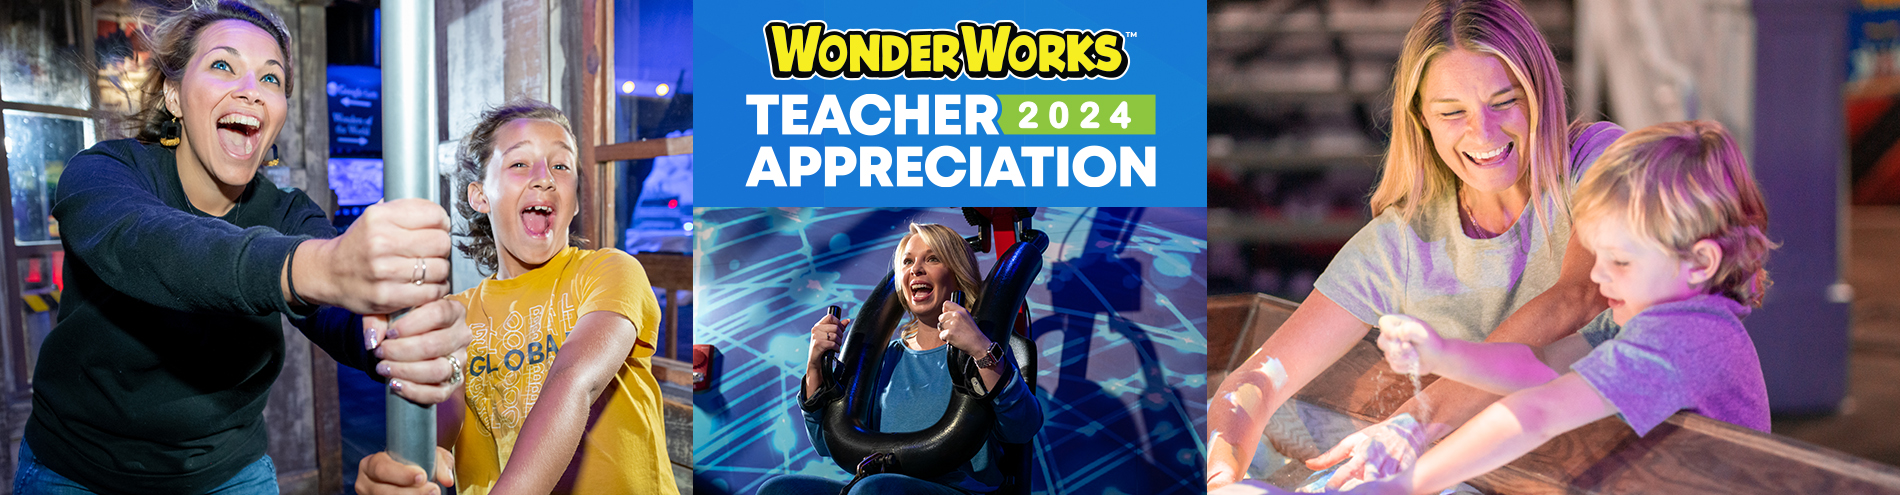 Teacher Appreciation Days Website Header